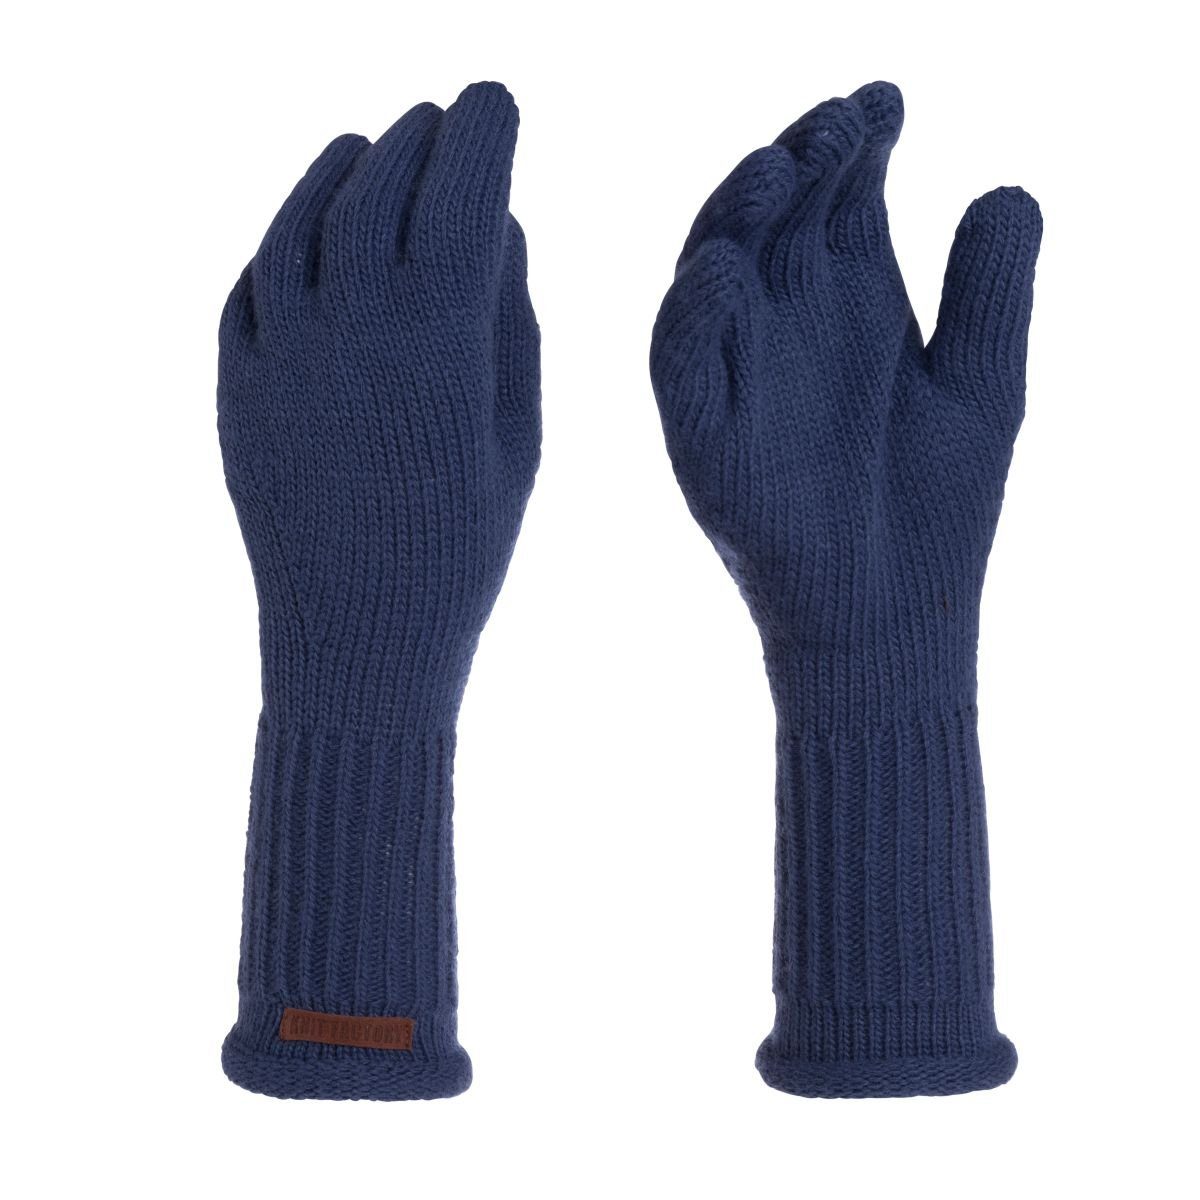 Glatt Handstulpen Dunkelblau ihne One Knit Factory Handschuhe Finger Lana Size Handschuhe Strickhandschuhe Handschuhe